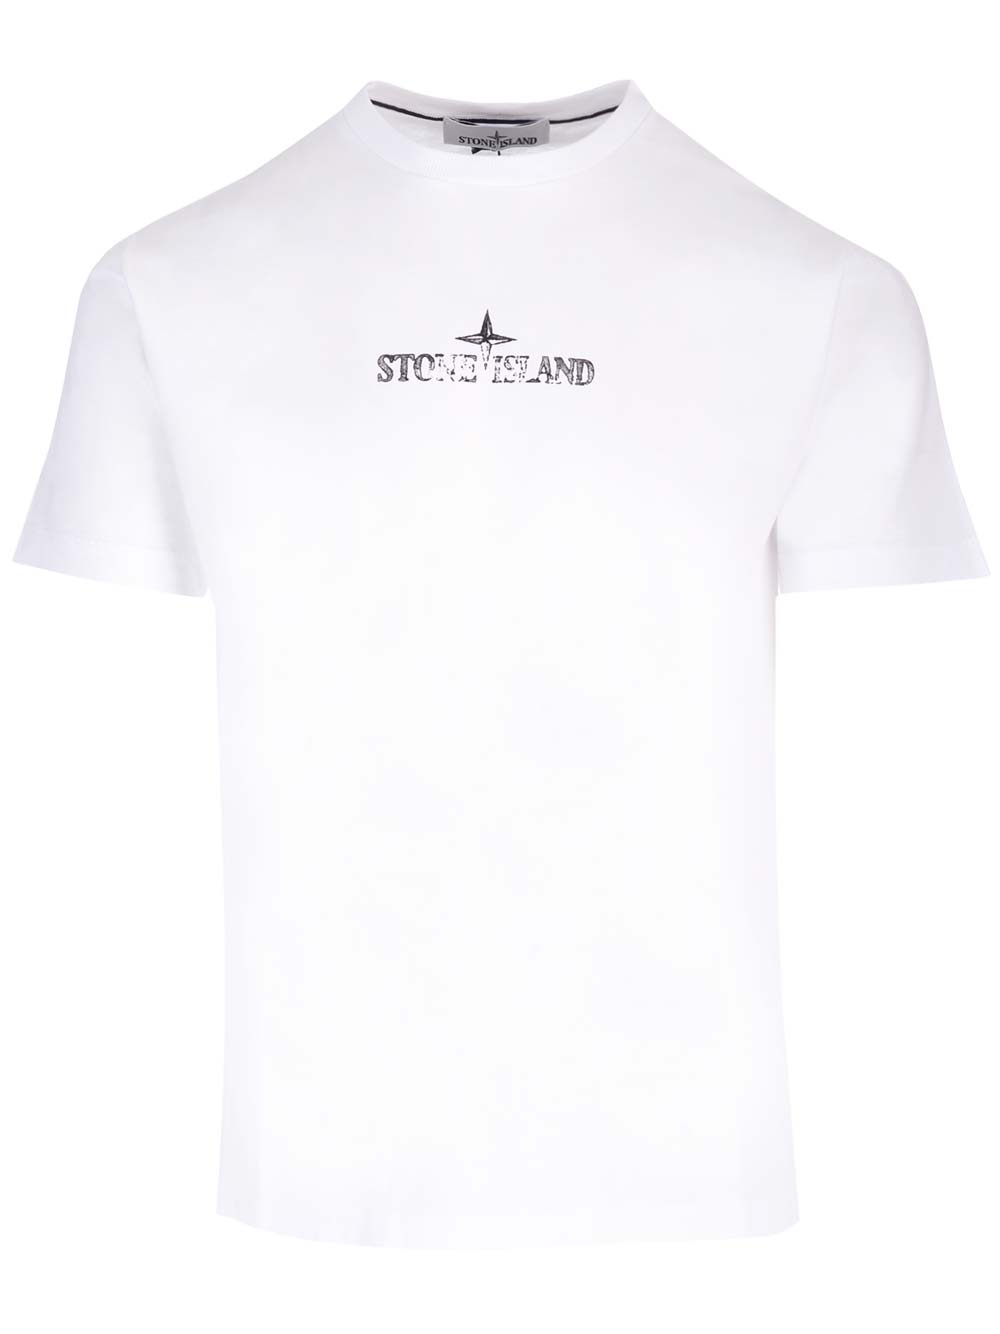 STONE ISLAND WHITE T-SHIRT WITH LOGO